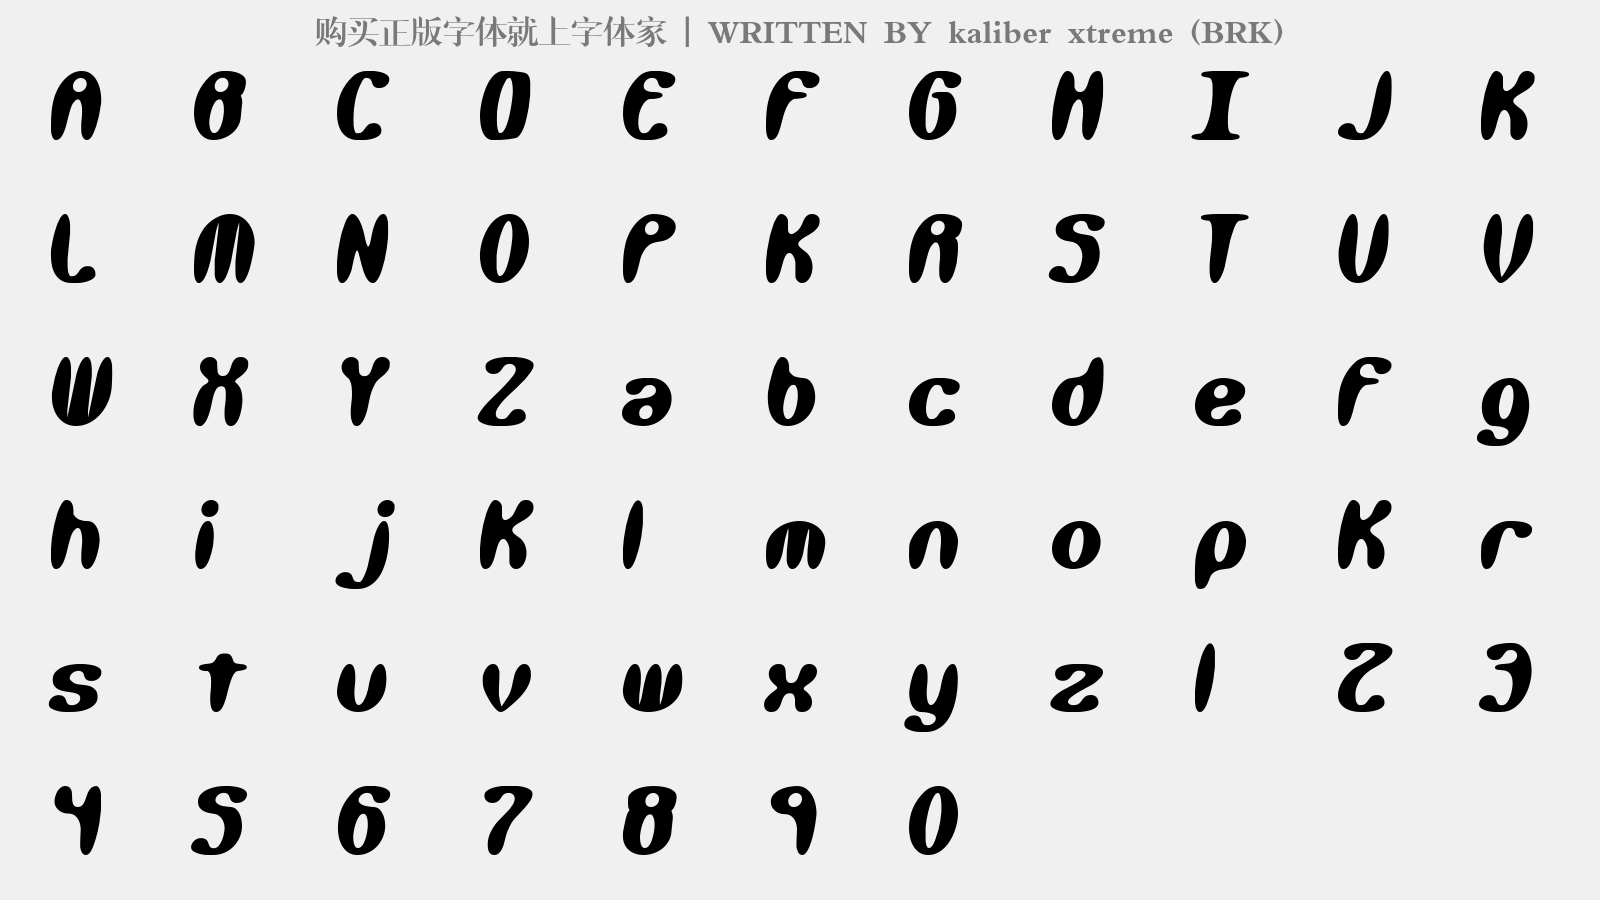 kaliber xtreme (BRK) - 大写字母/小写字母/数字